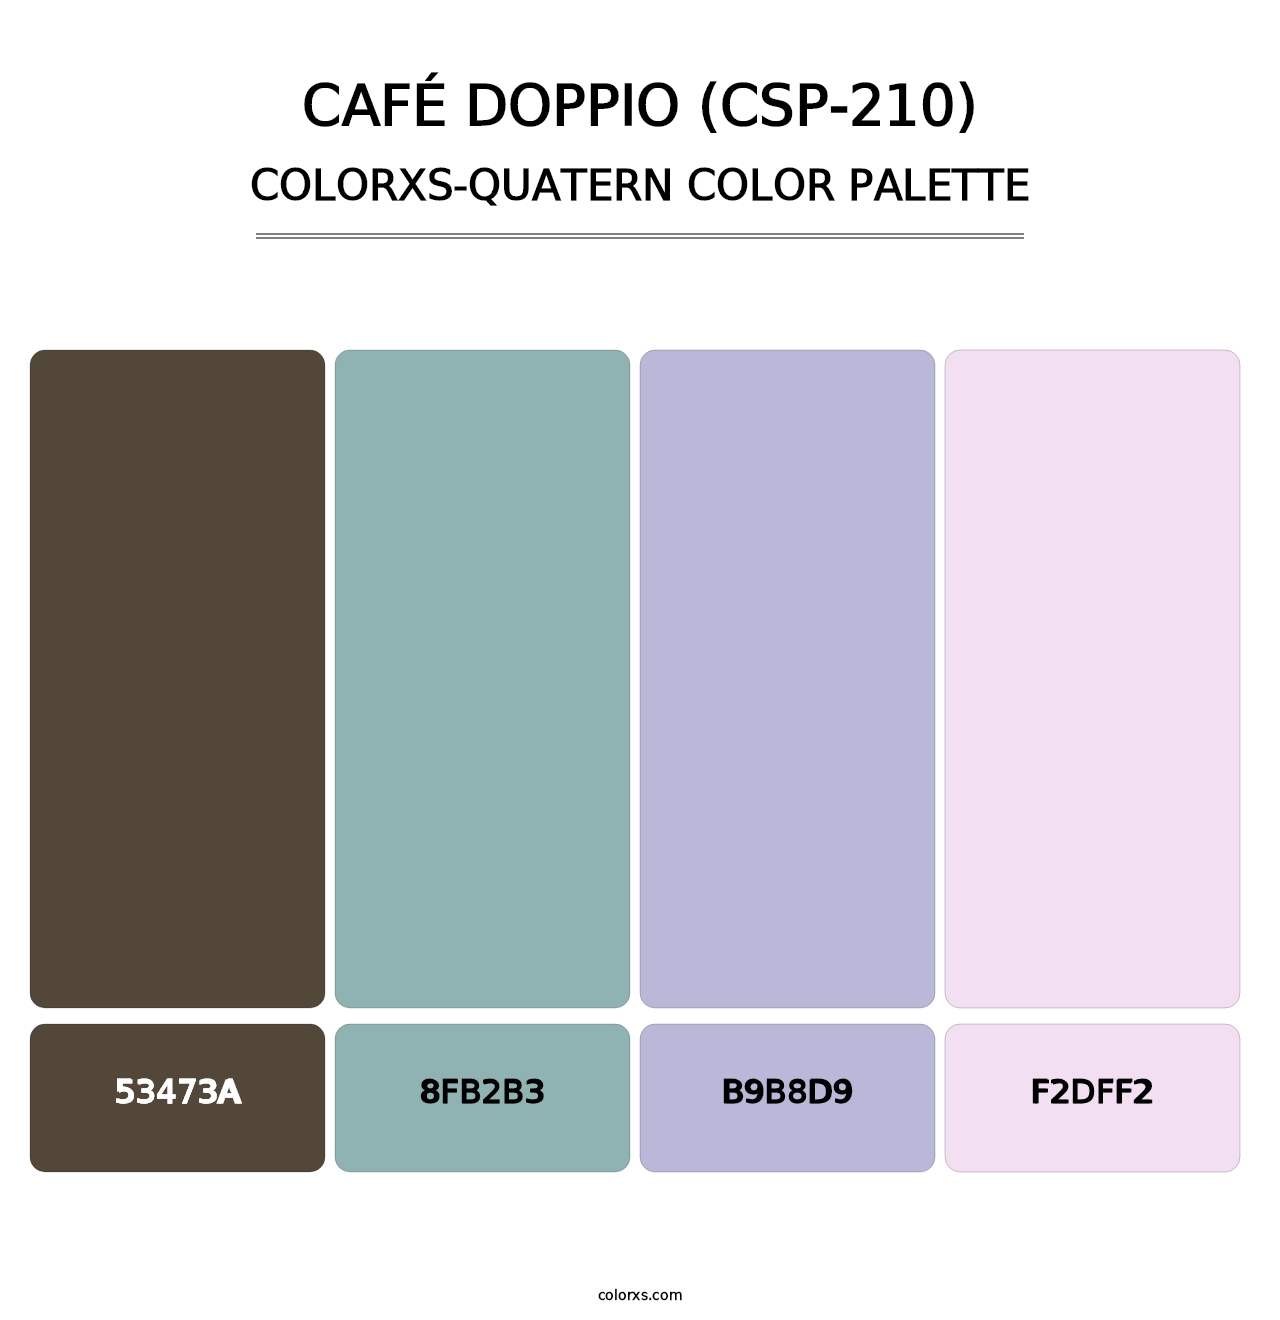 Café Doppio (CSP-210) - Colorxs Quatern Palette